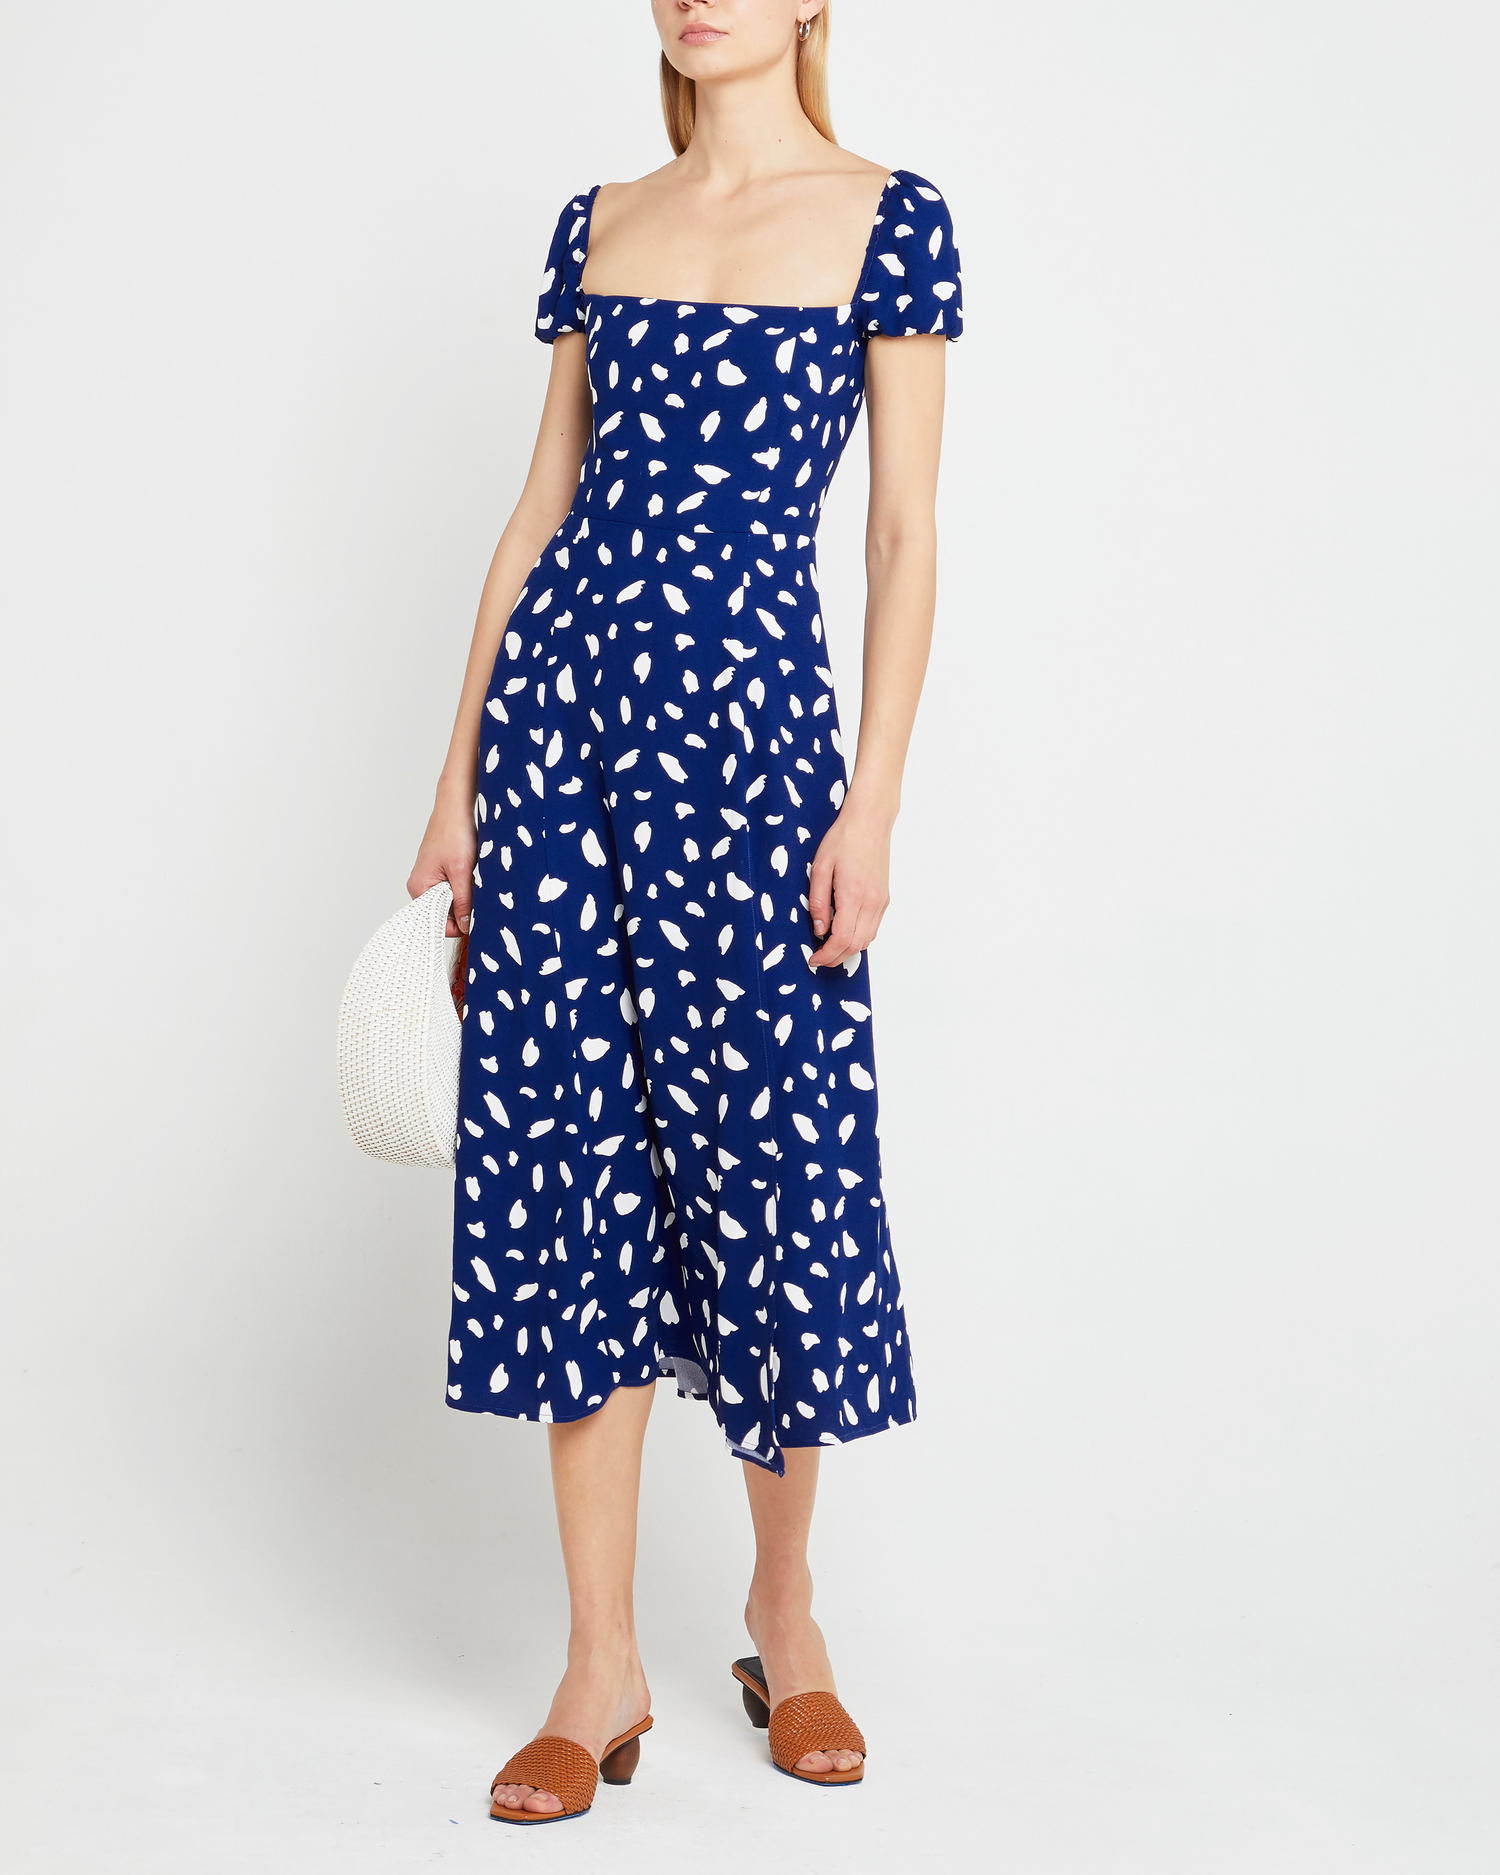 Fifth image of Cyra Dress, a blue midi dress, white polka dot, cap sleeves, side slit, square neckline